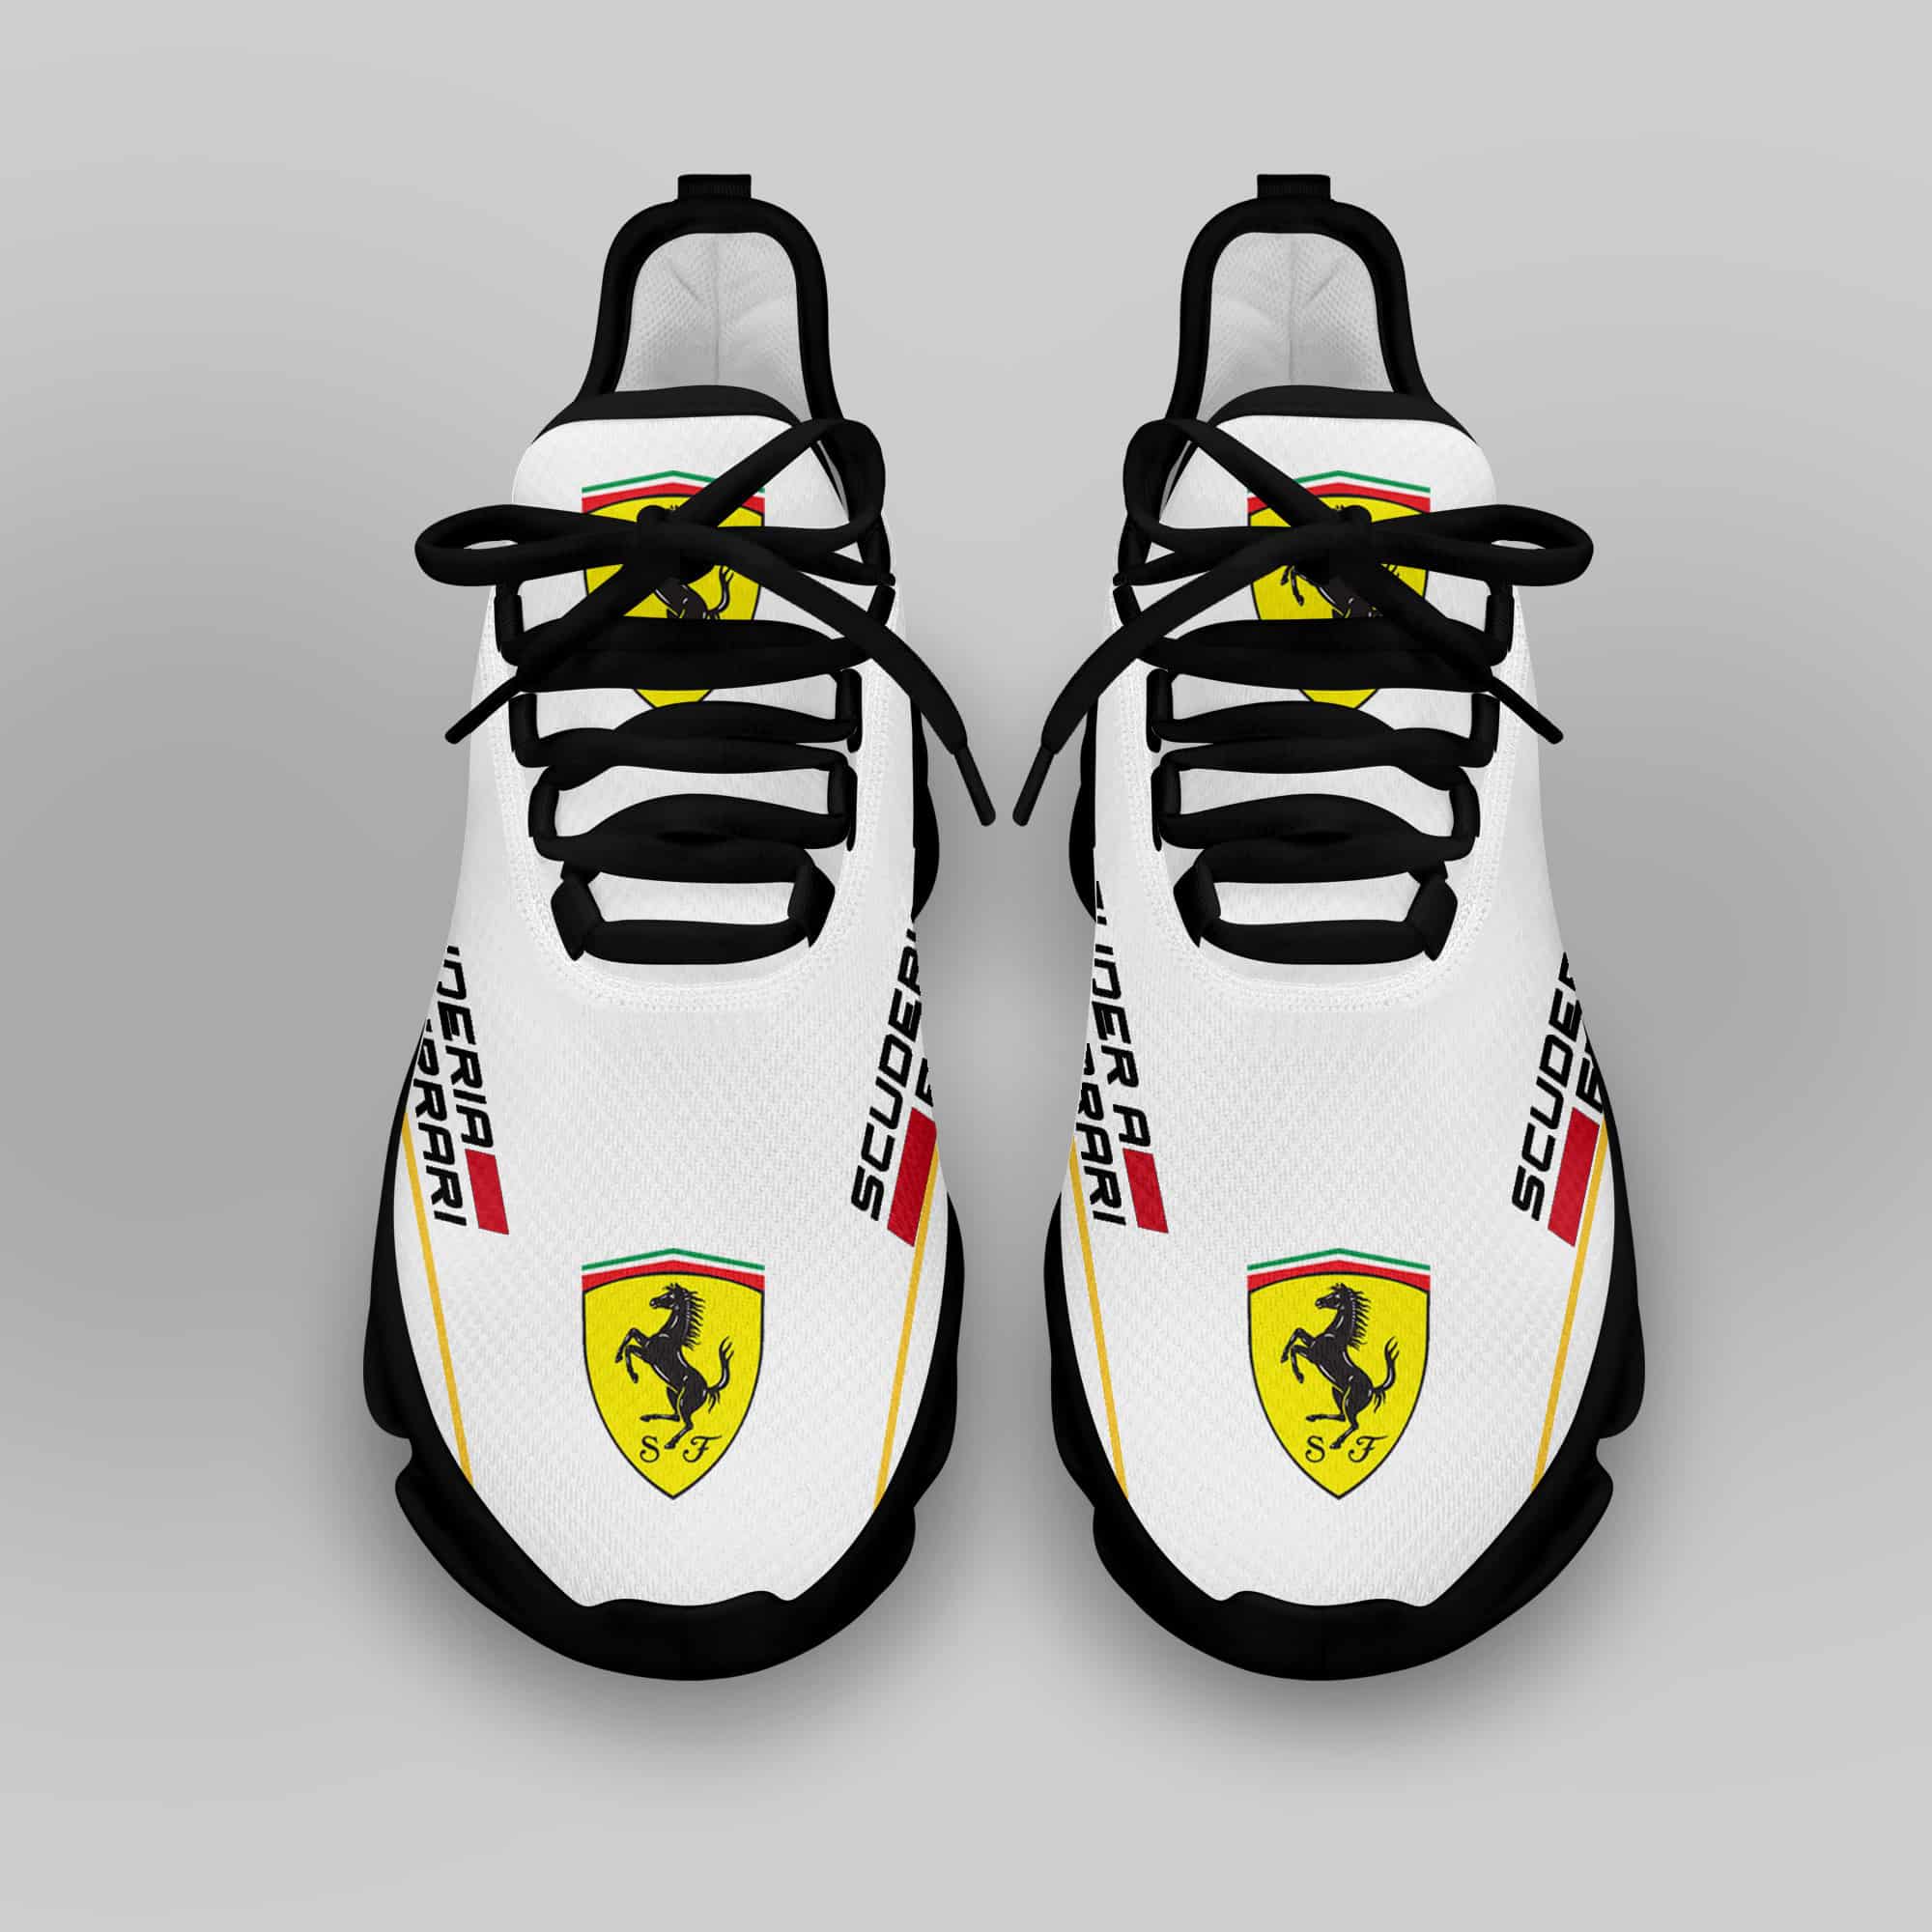 Ferrari Sneaker Running Shoes Max Soul Shoes Sneakers Ver 33 4